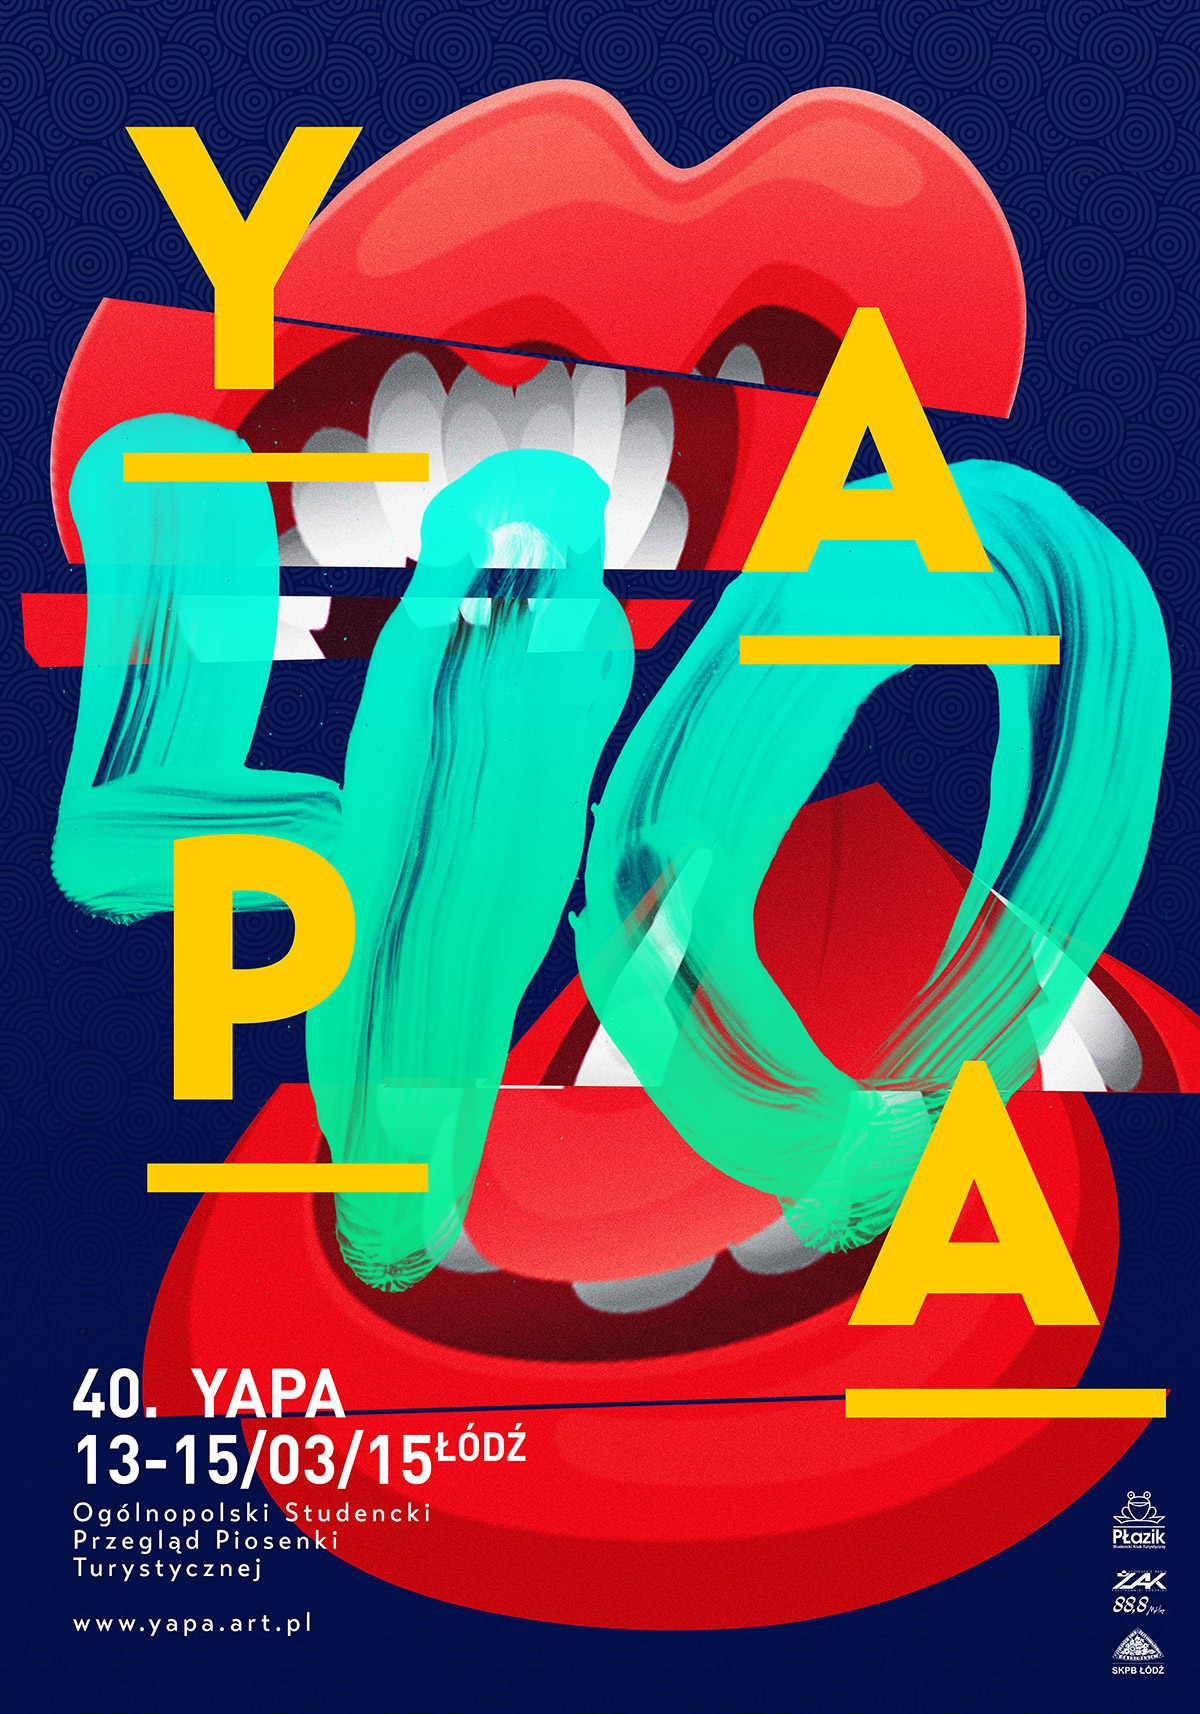 yapa Music Festival ivvanski lodz poster 40 years politechnika